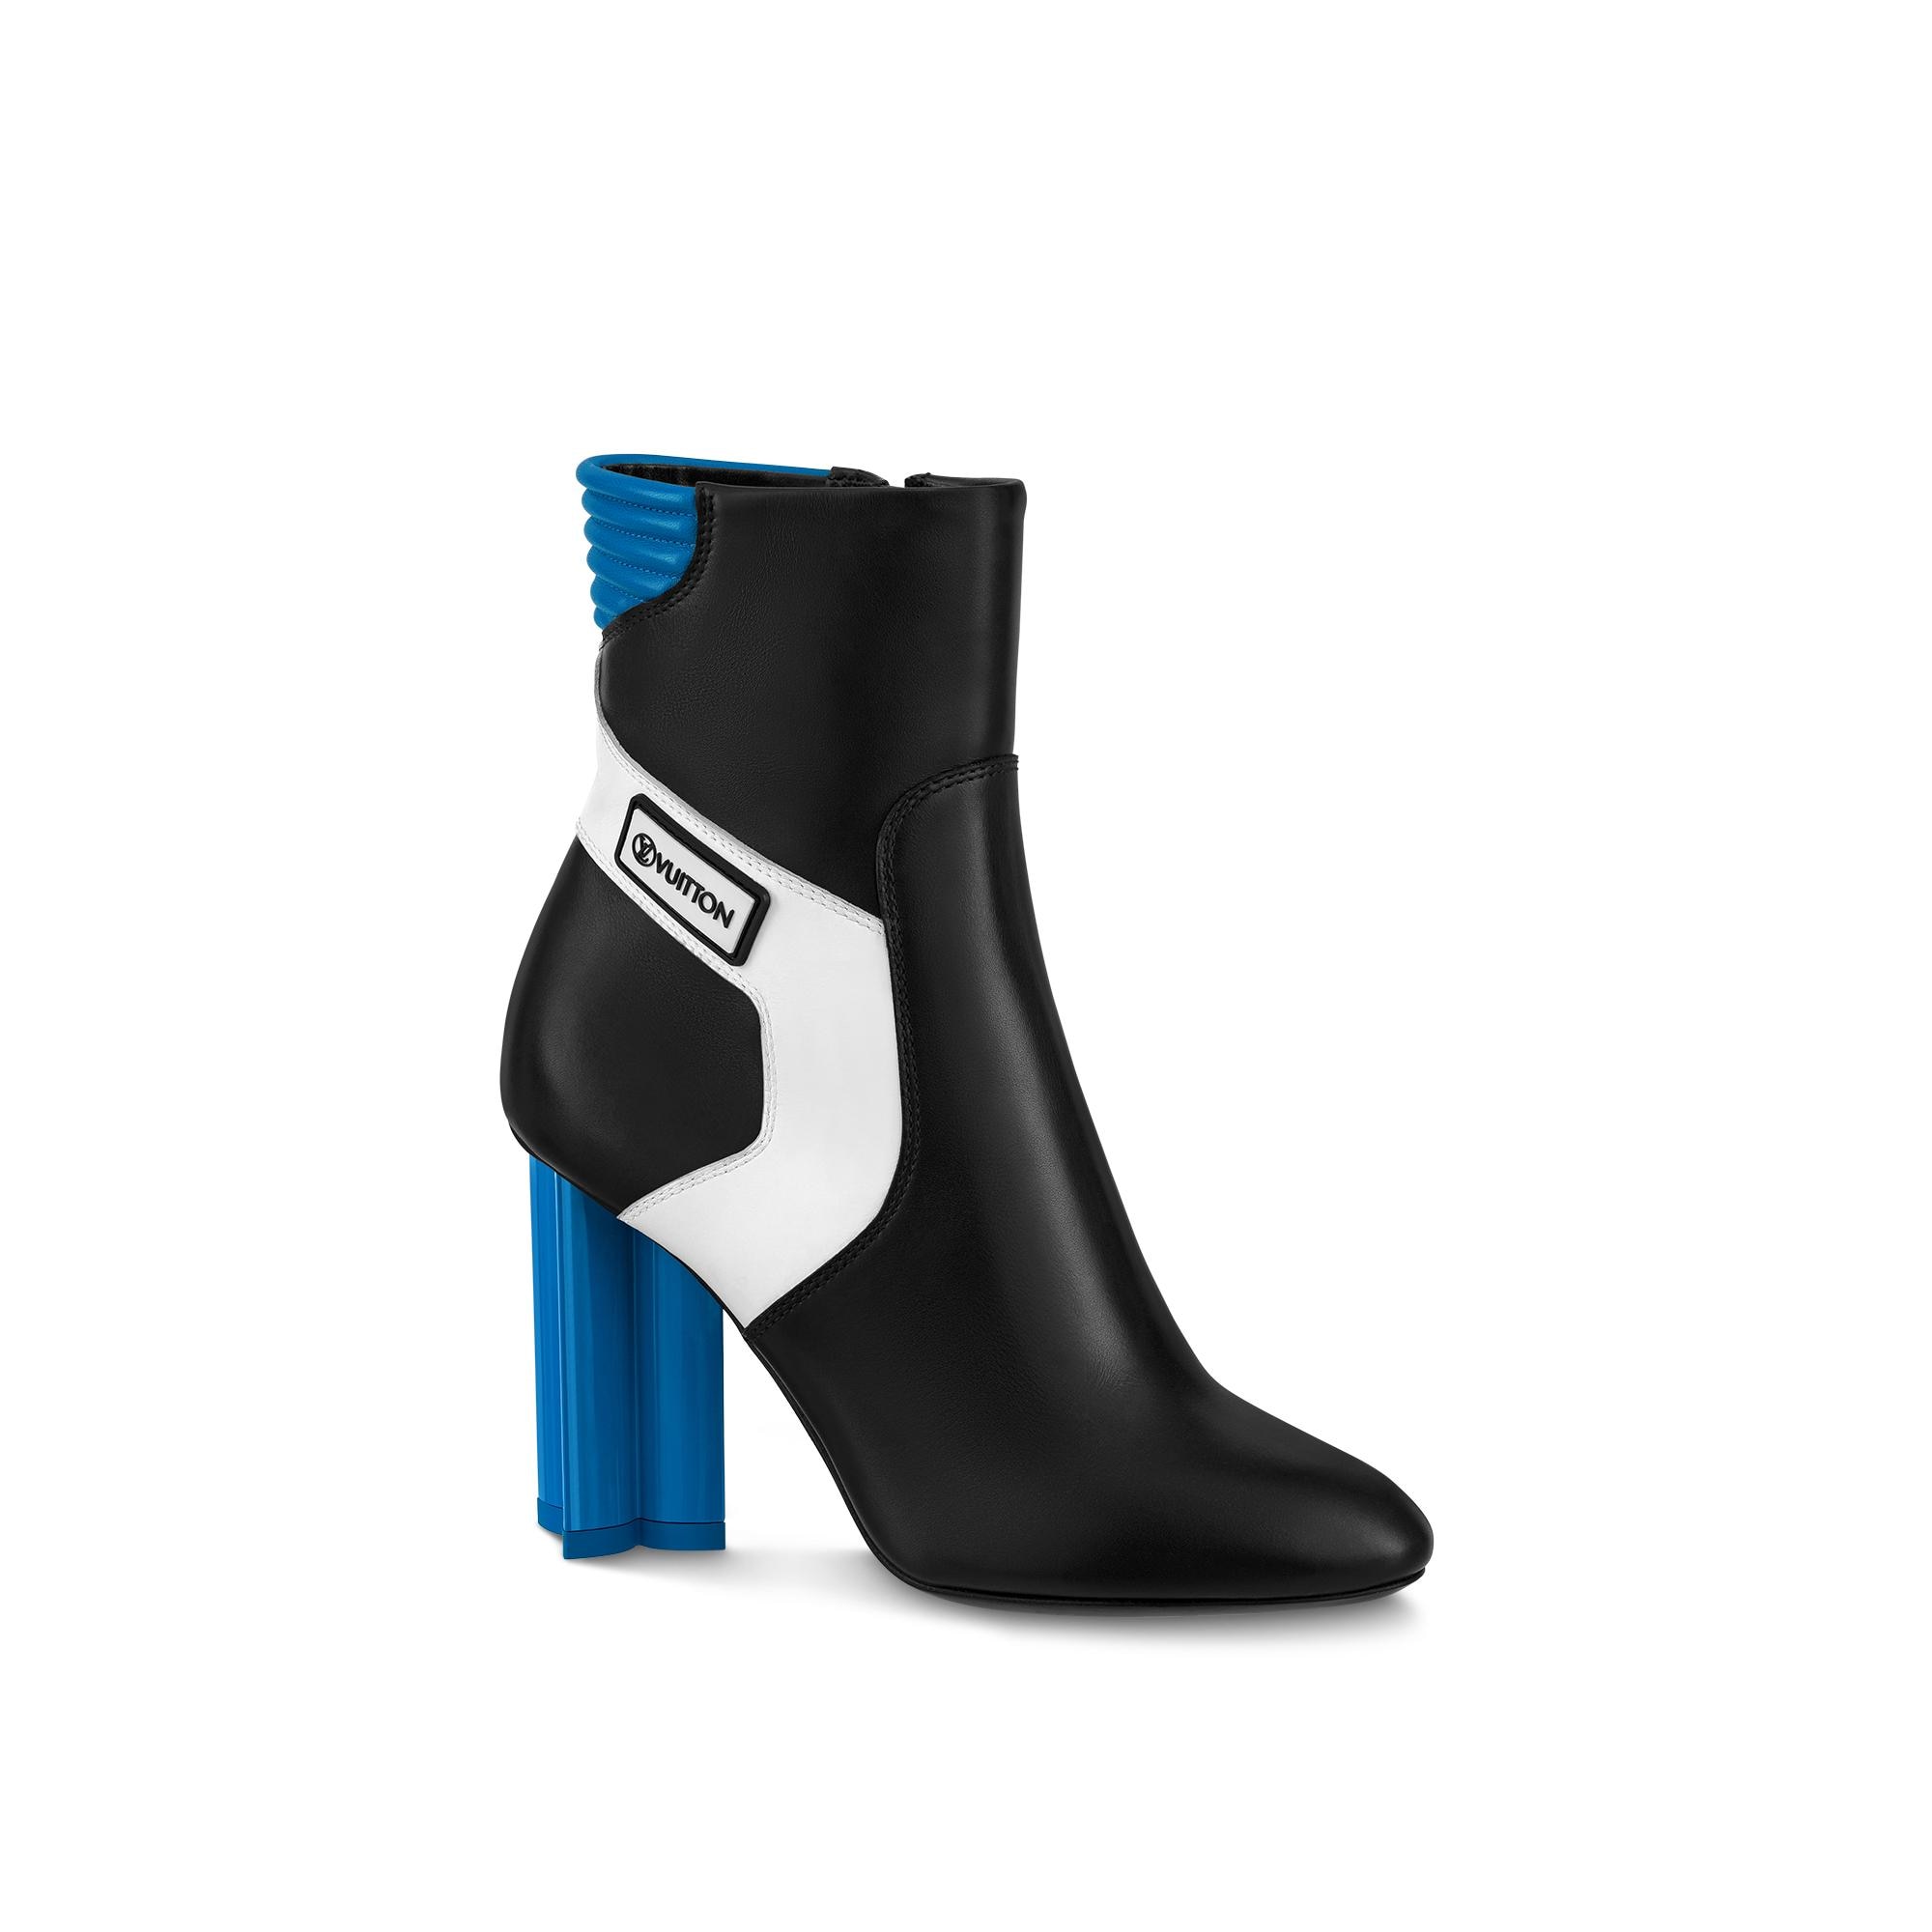 Louis Vuitton Silhouette Ankle Boot BLACK. Size 39.0